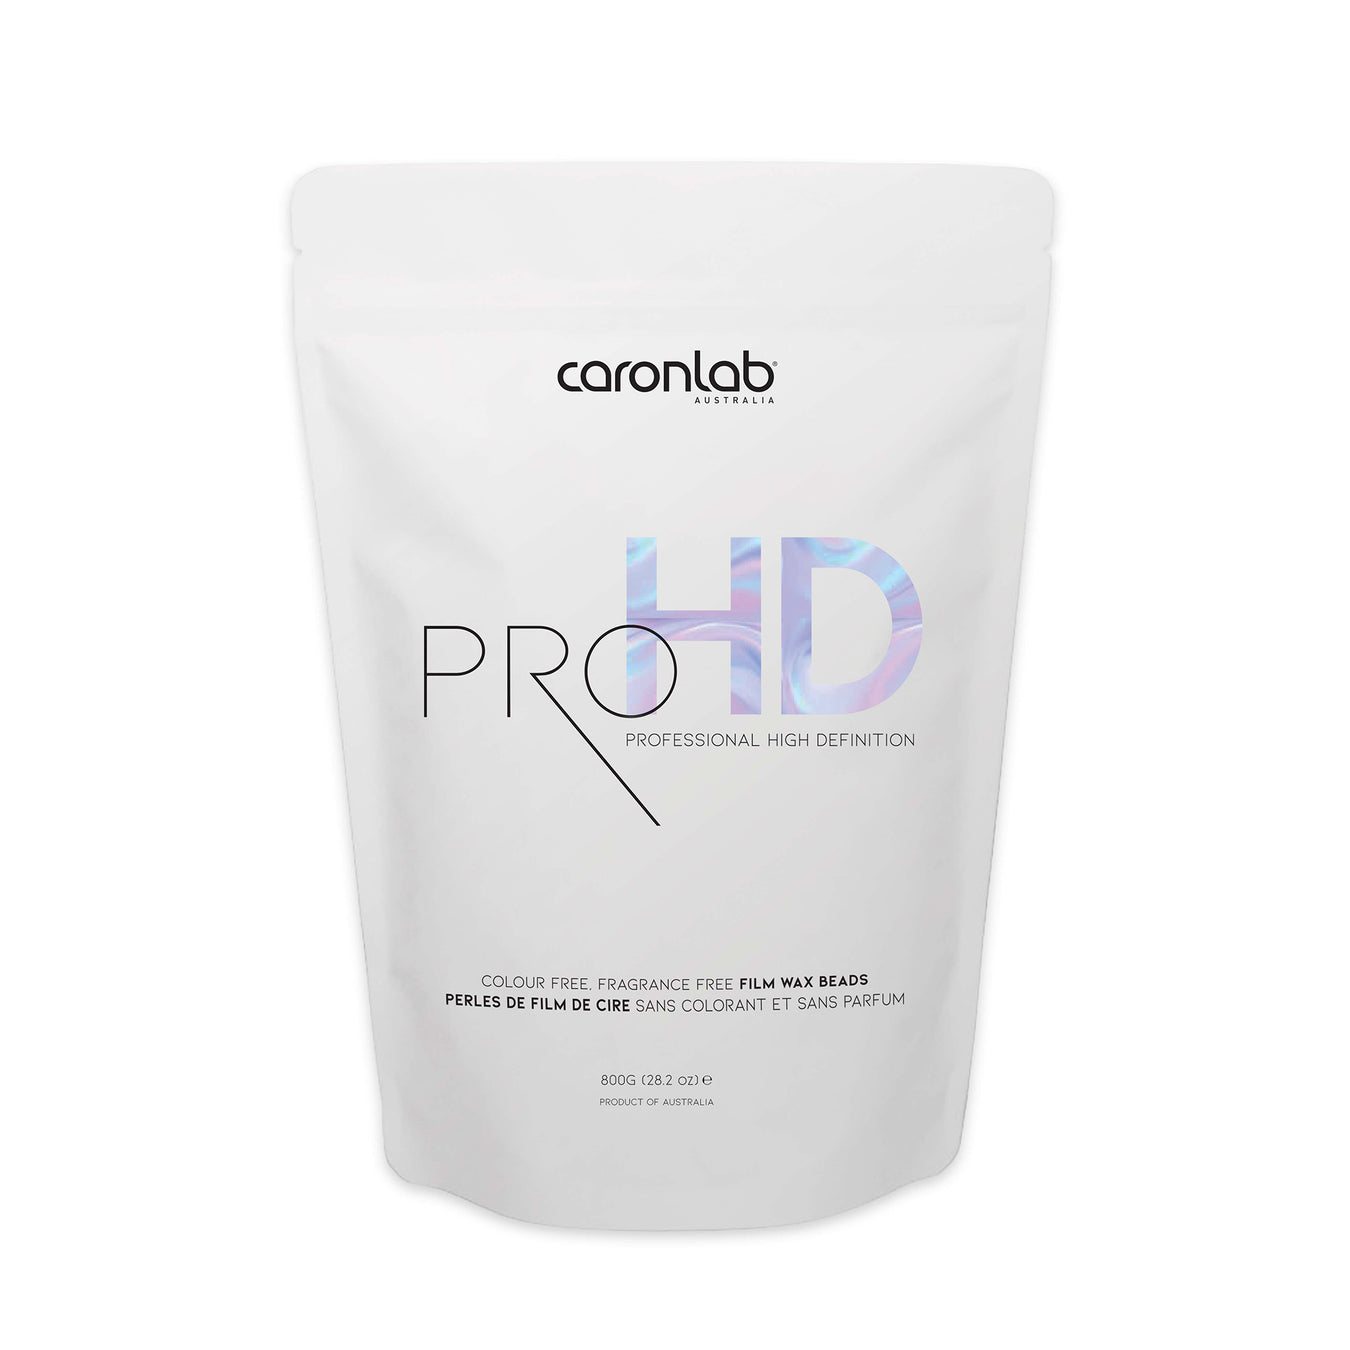 Caronlab Pro HD